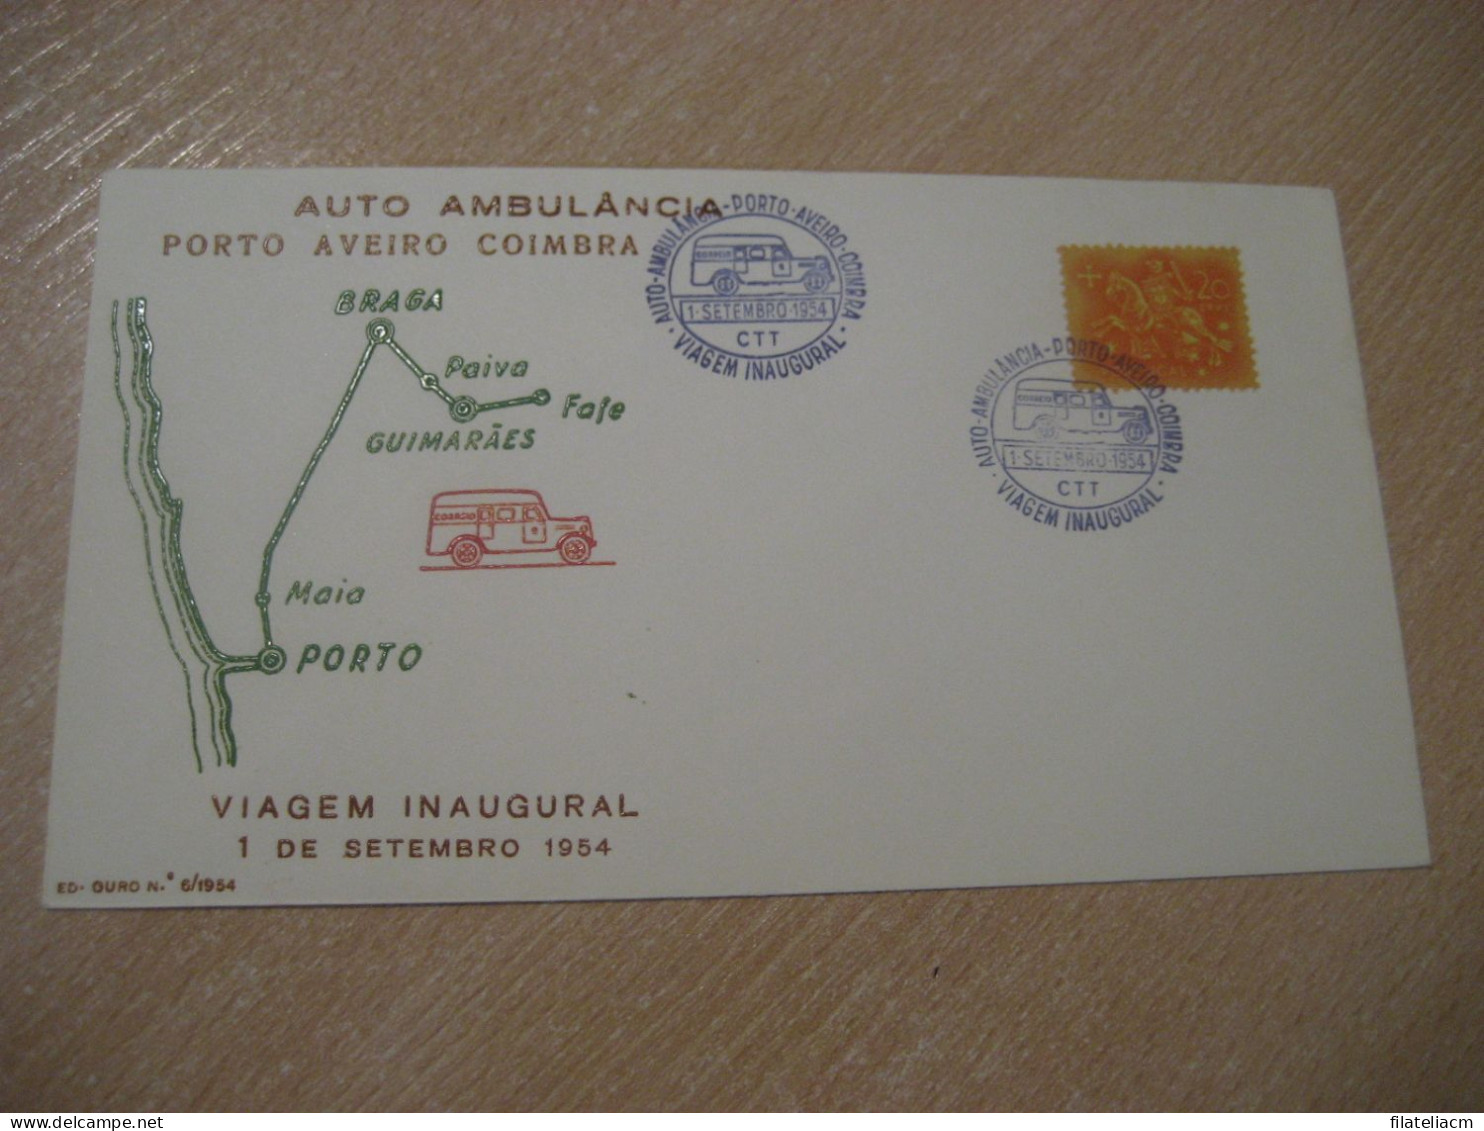 PORTO - AVEIRO - COIMBRA 1954 Viagem Inaugural Auto Ambulancia Van Truck Cancel Cover PORTUGAL - Camions